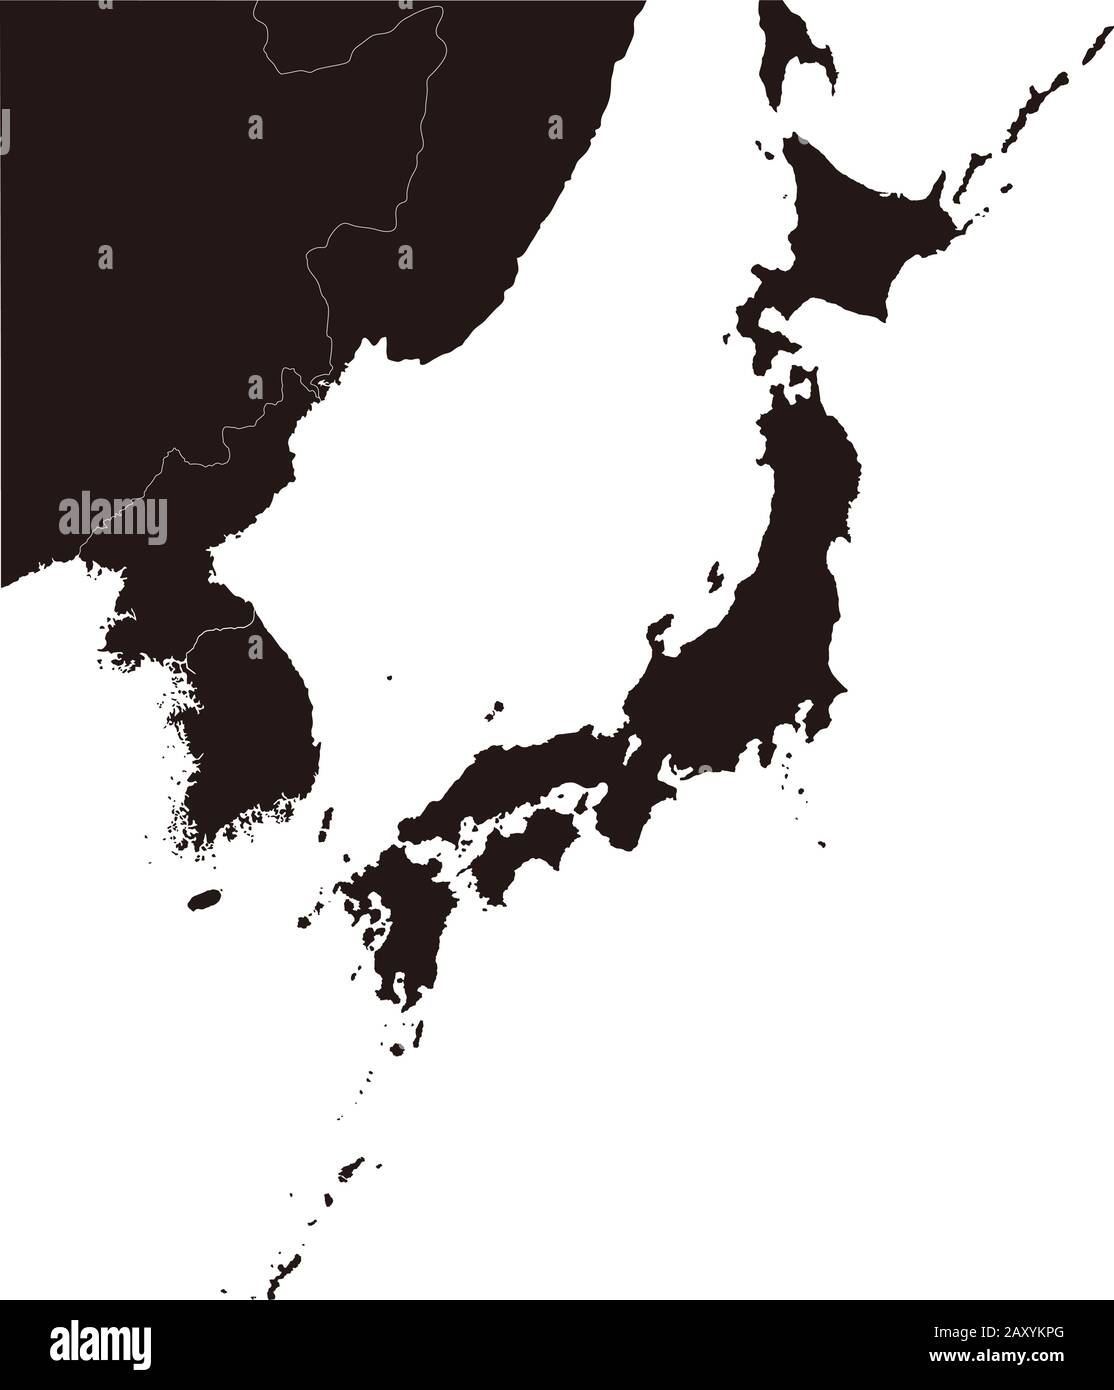 Vektor-Grafik für die Karte in Fernost asien (Japanisch) Stock Vektor